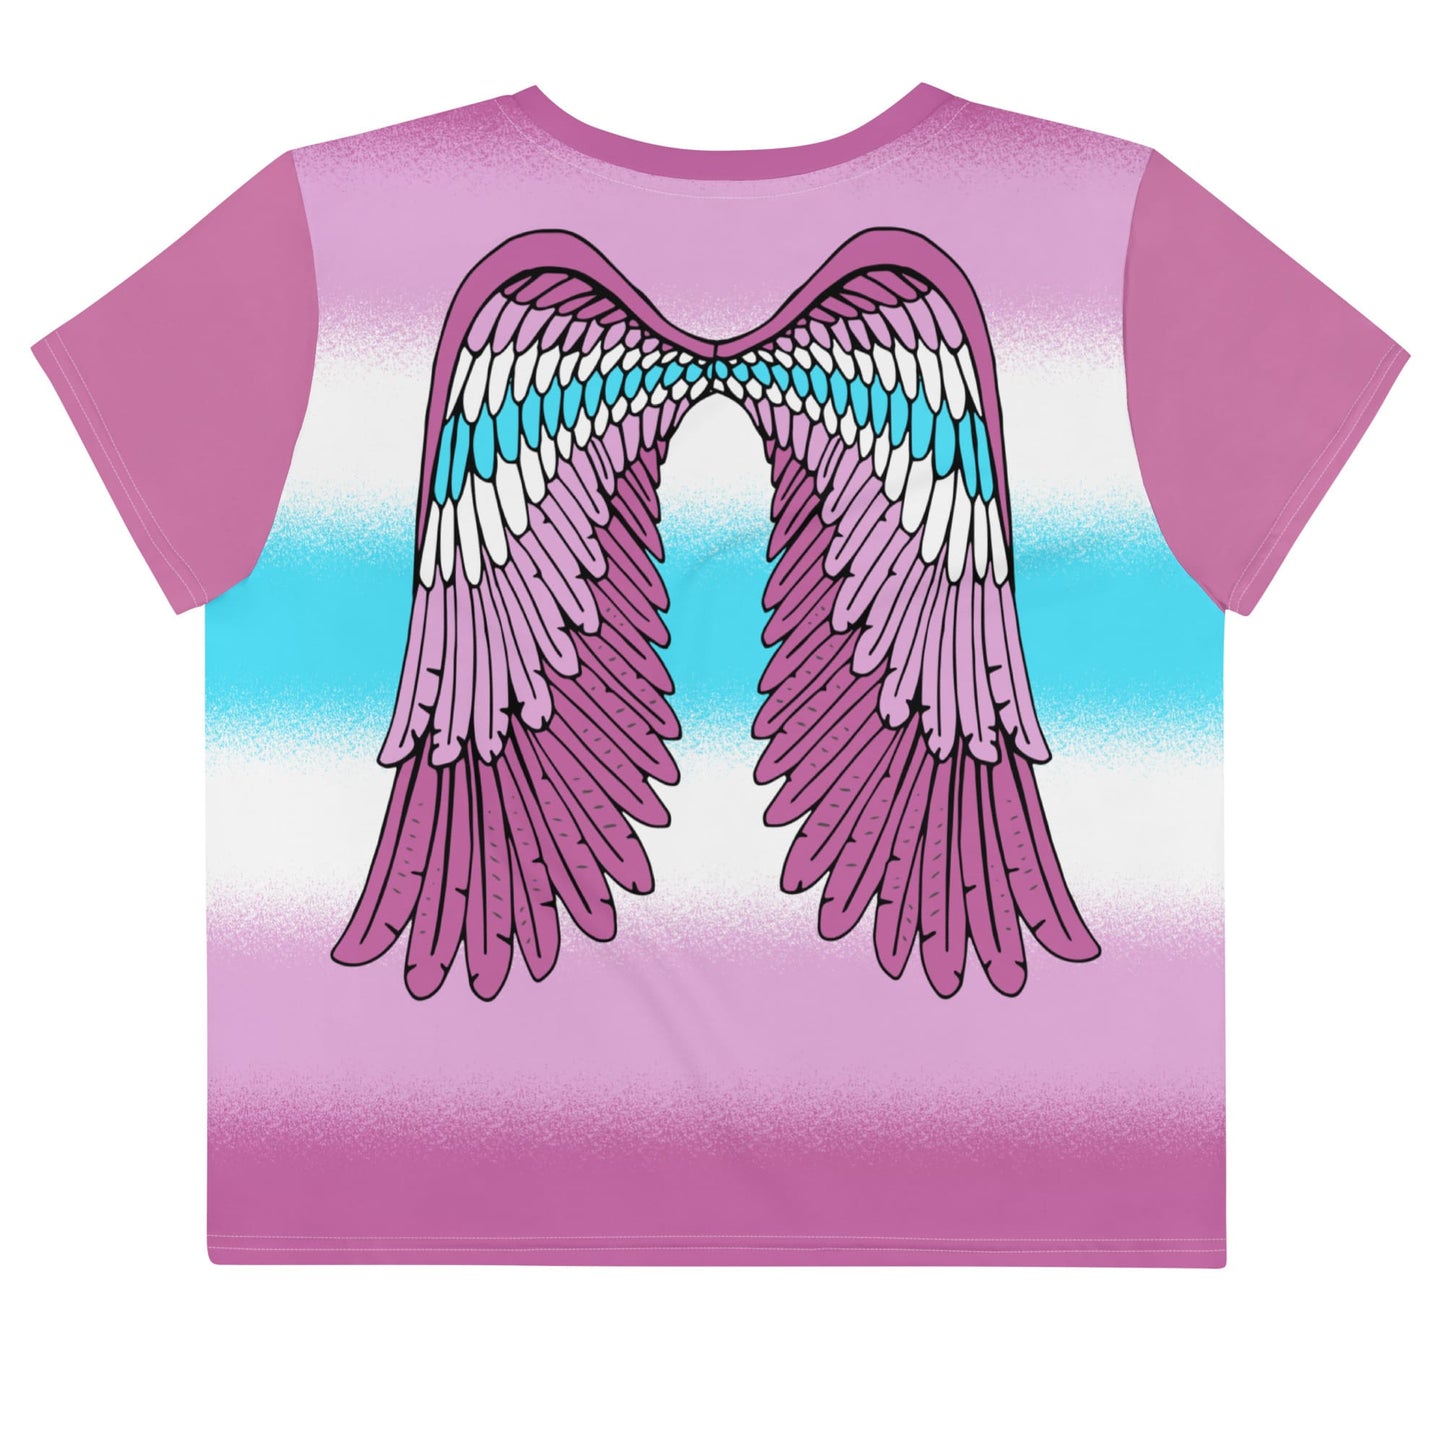 femboy crop top, cute angel wings on the back, flatlay back